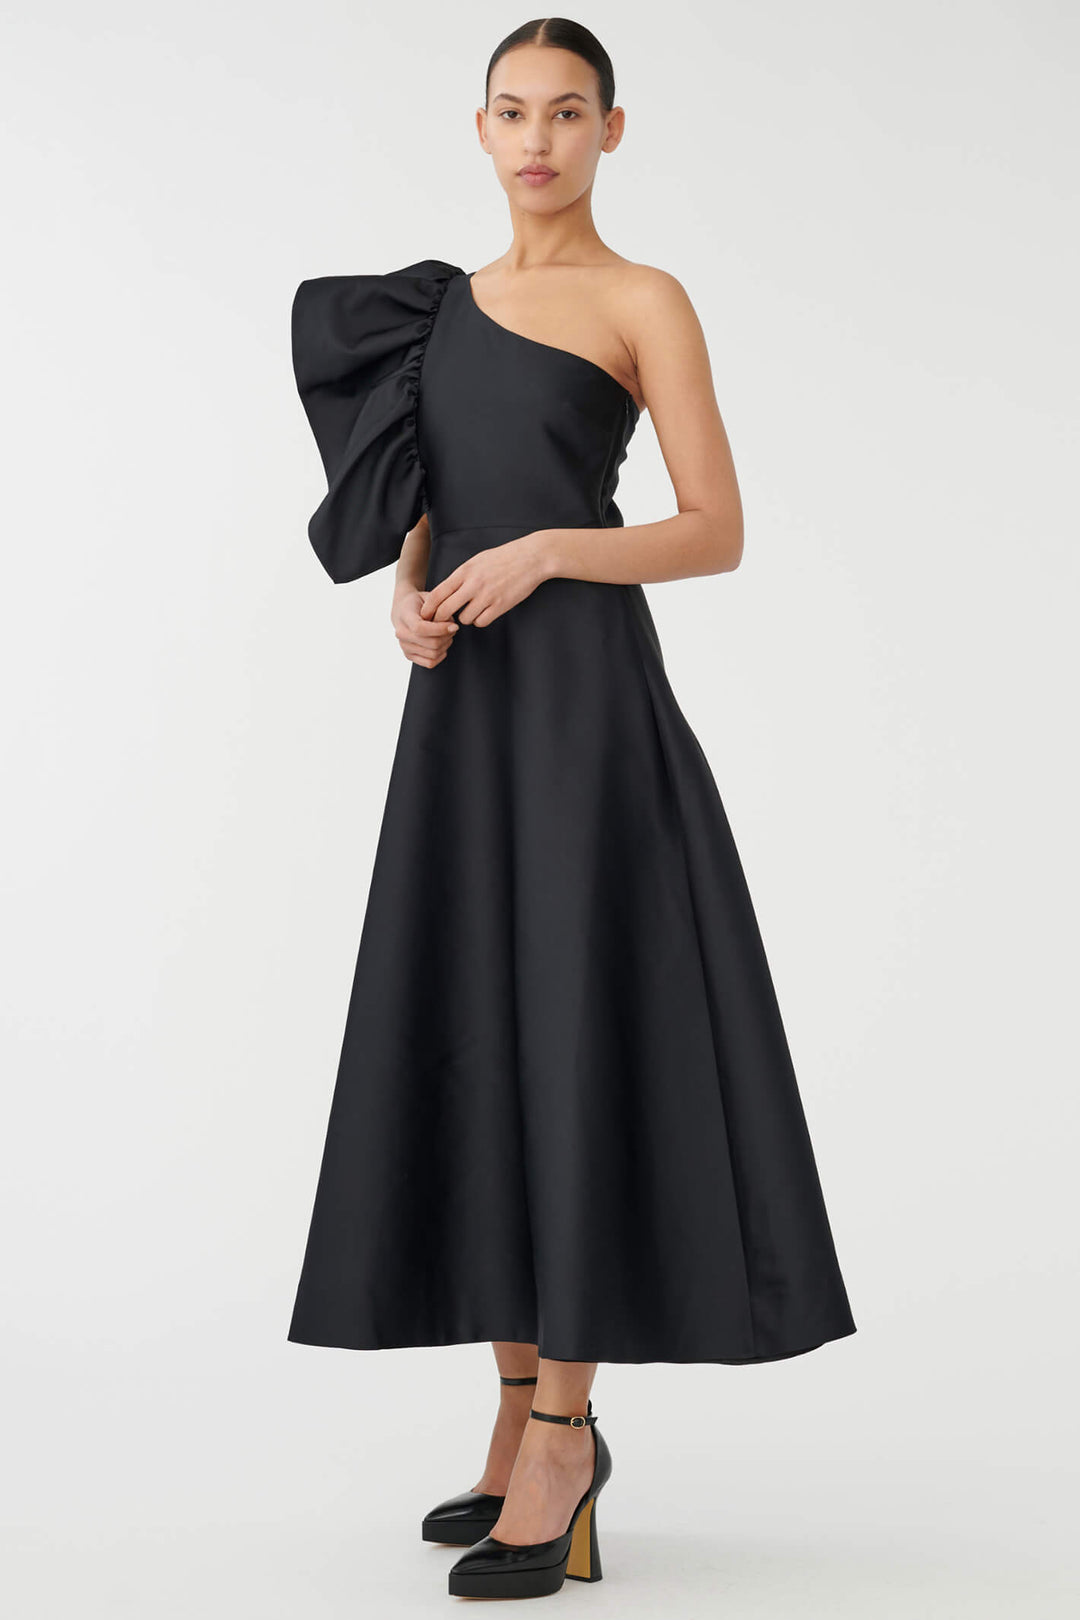 Dea Kudibal Flornette 0261023 Black One Shoulder Midi Dress - Olivia Grace Fashion